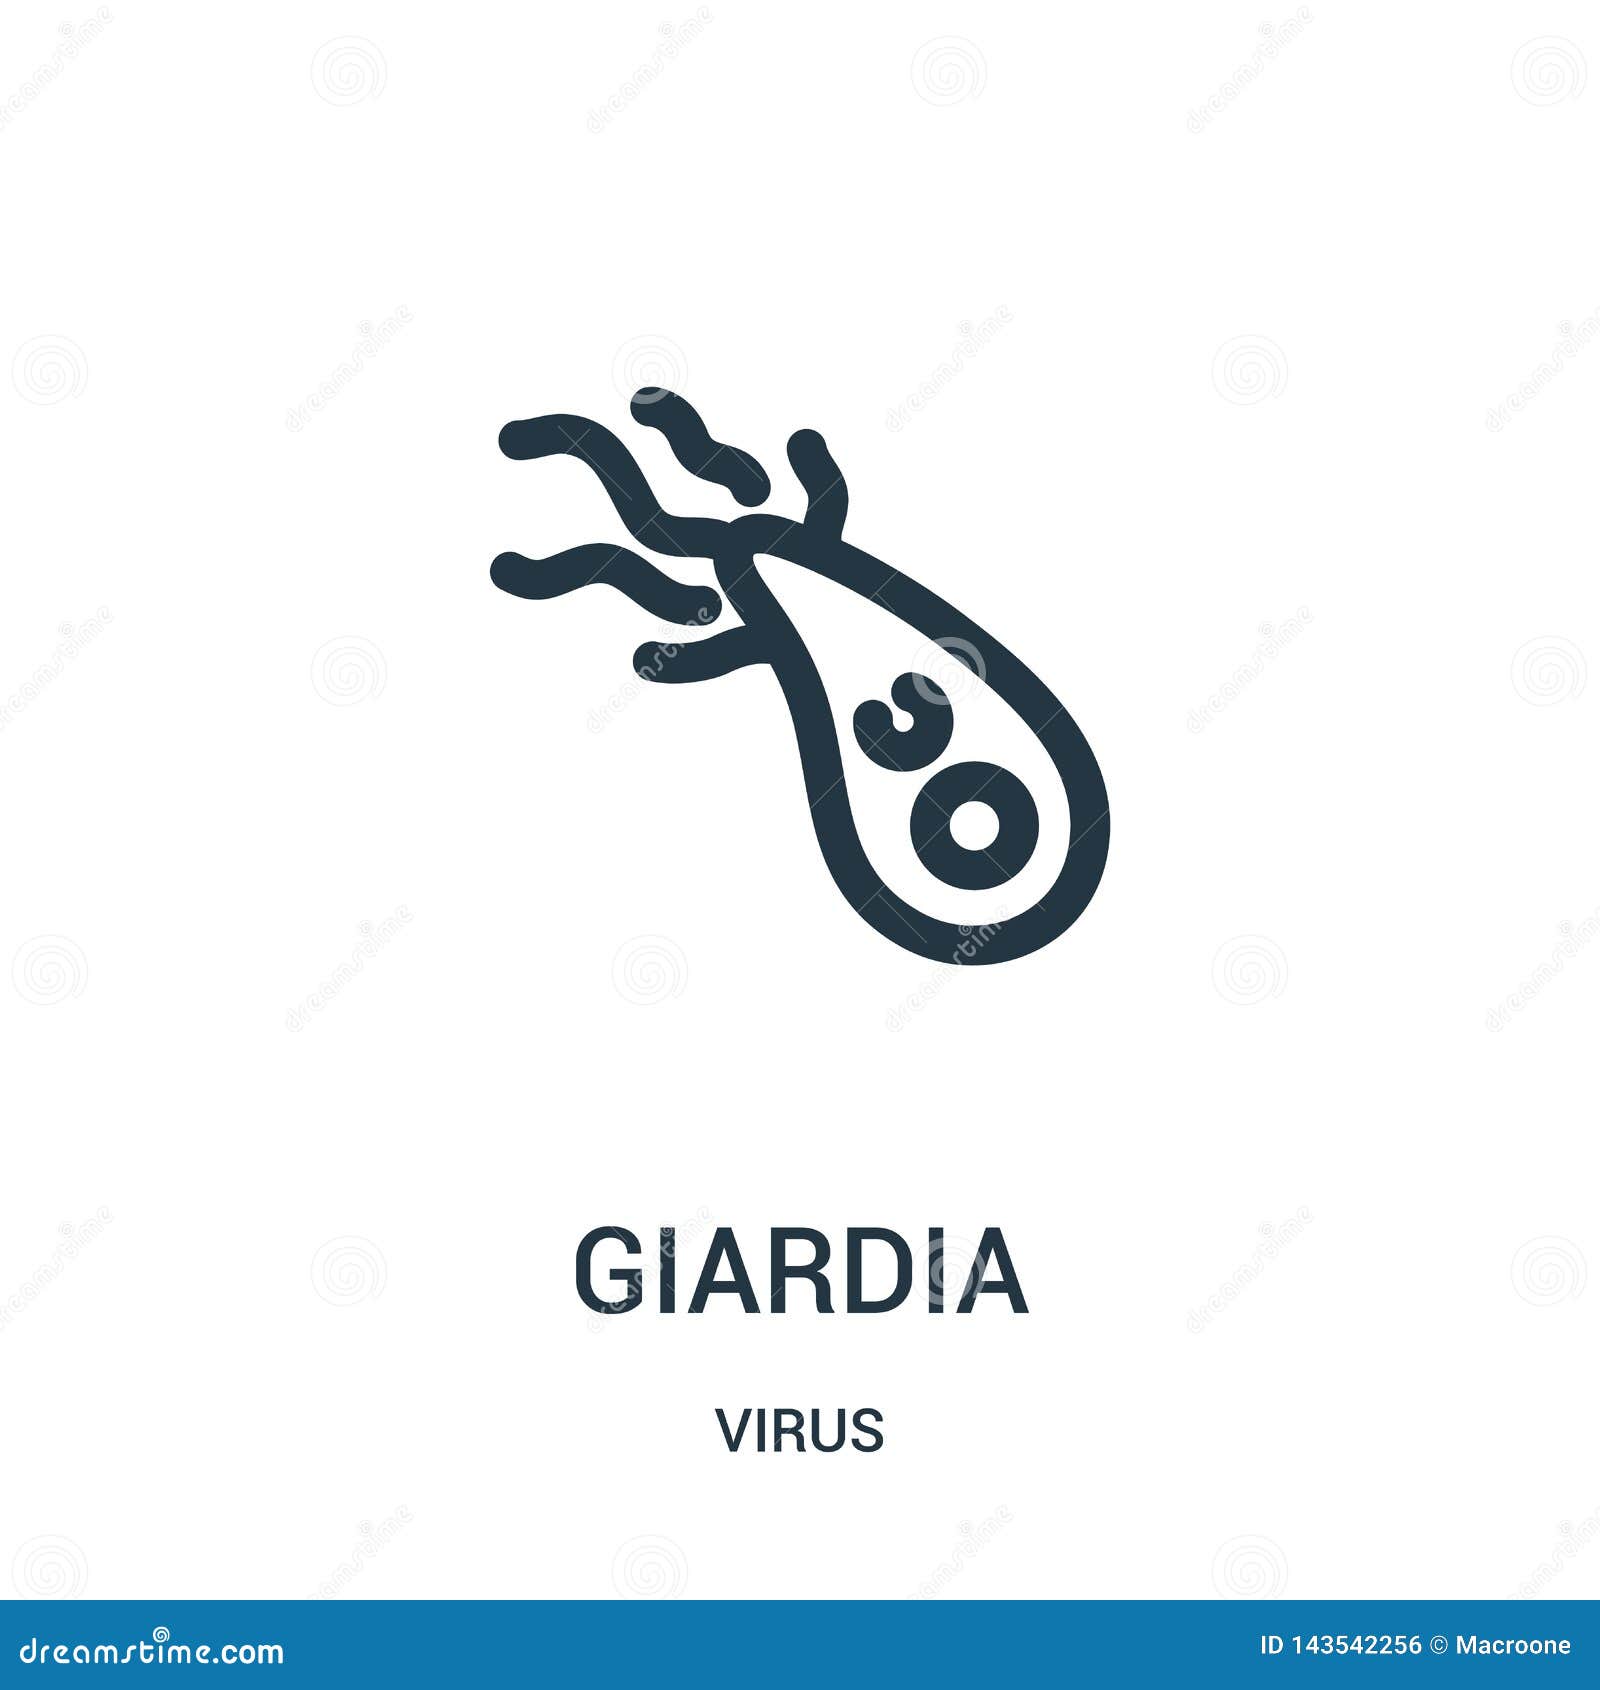 giardia free vector